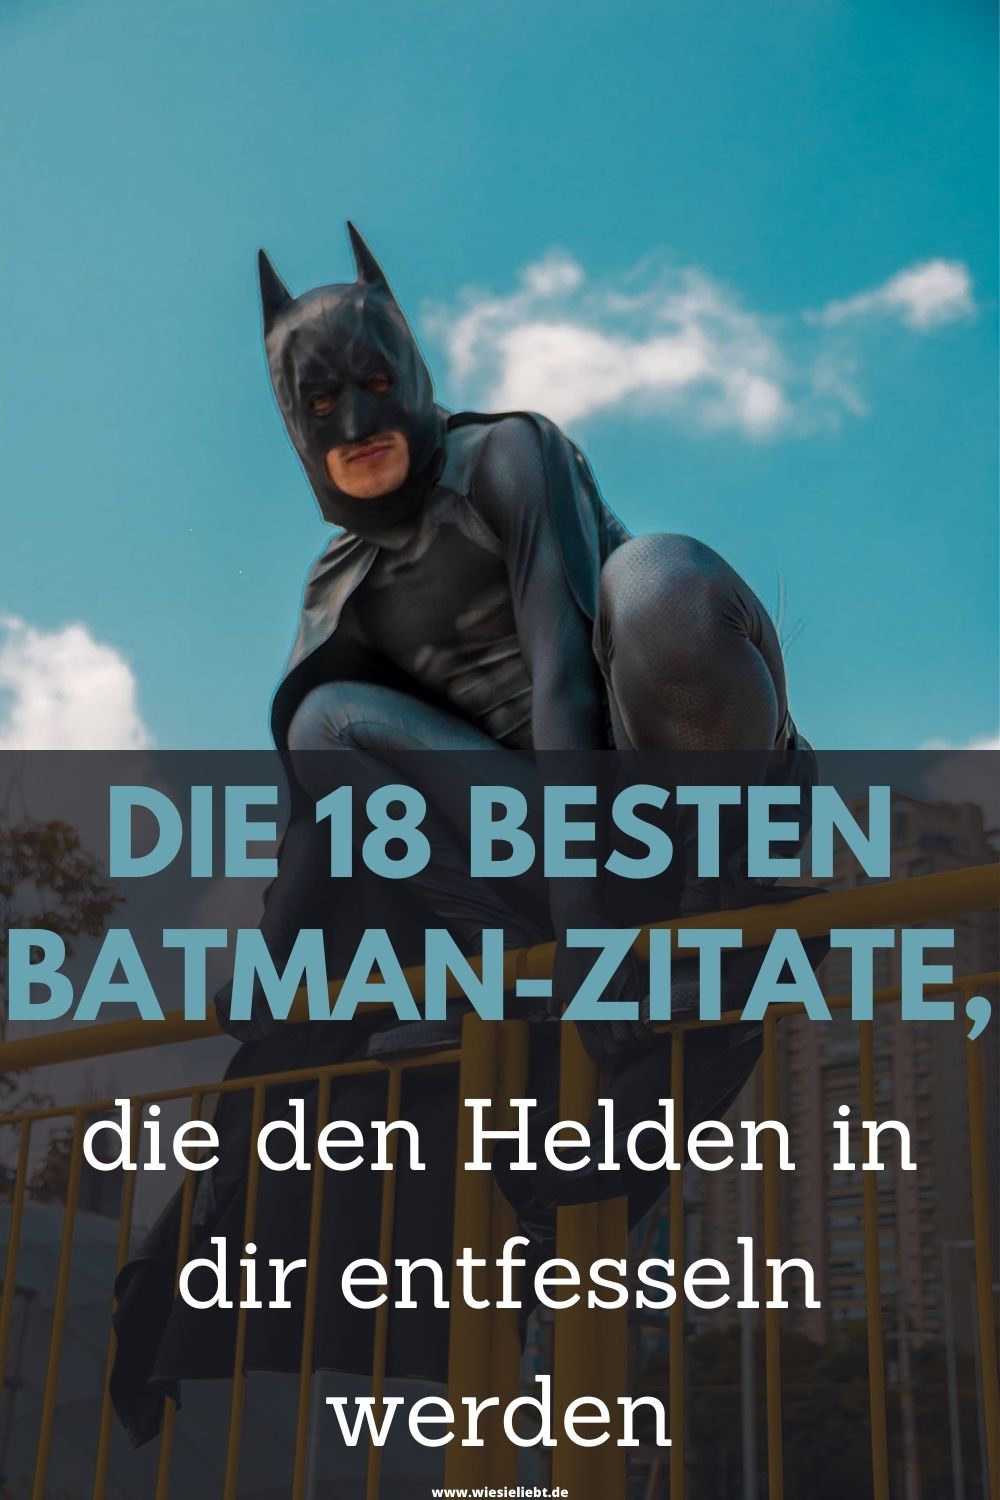 Die-18-besten-Batman-Zitate-die-den-Helden-in-dir-entfesseln-werden